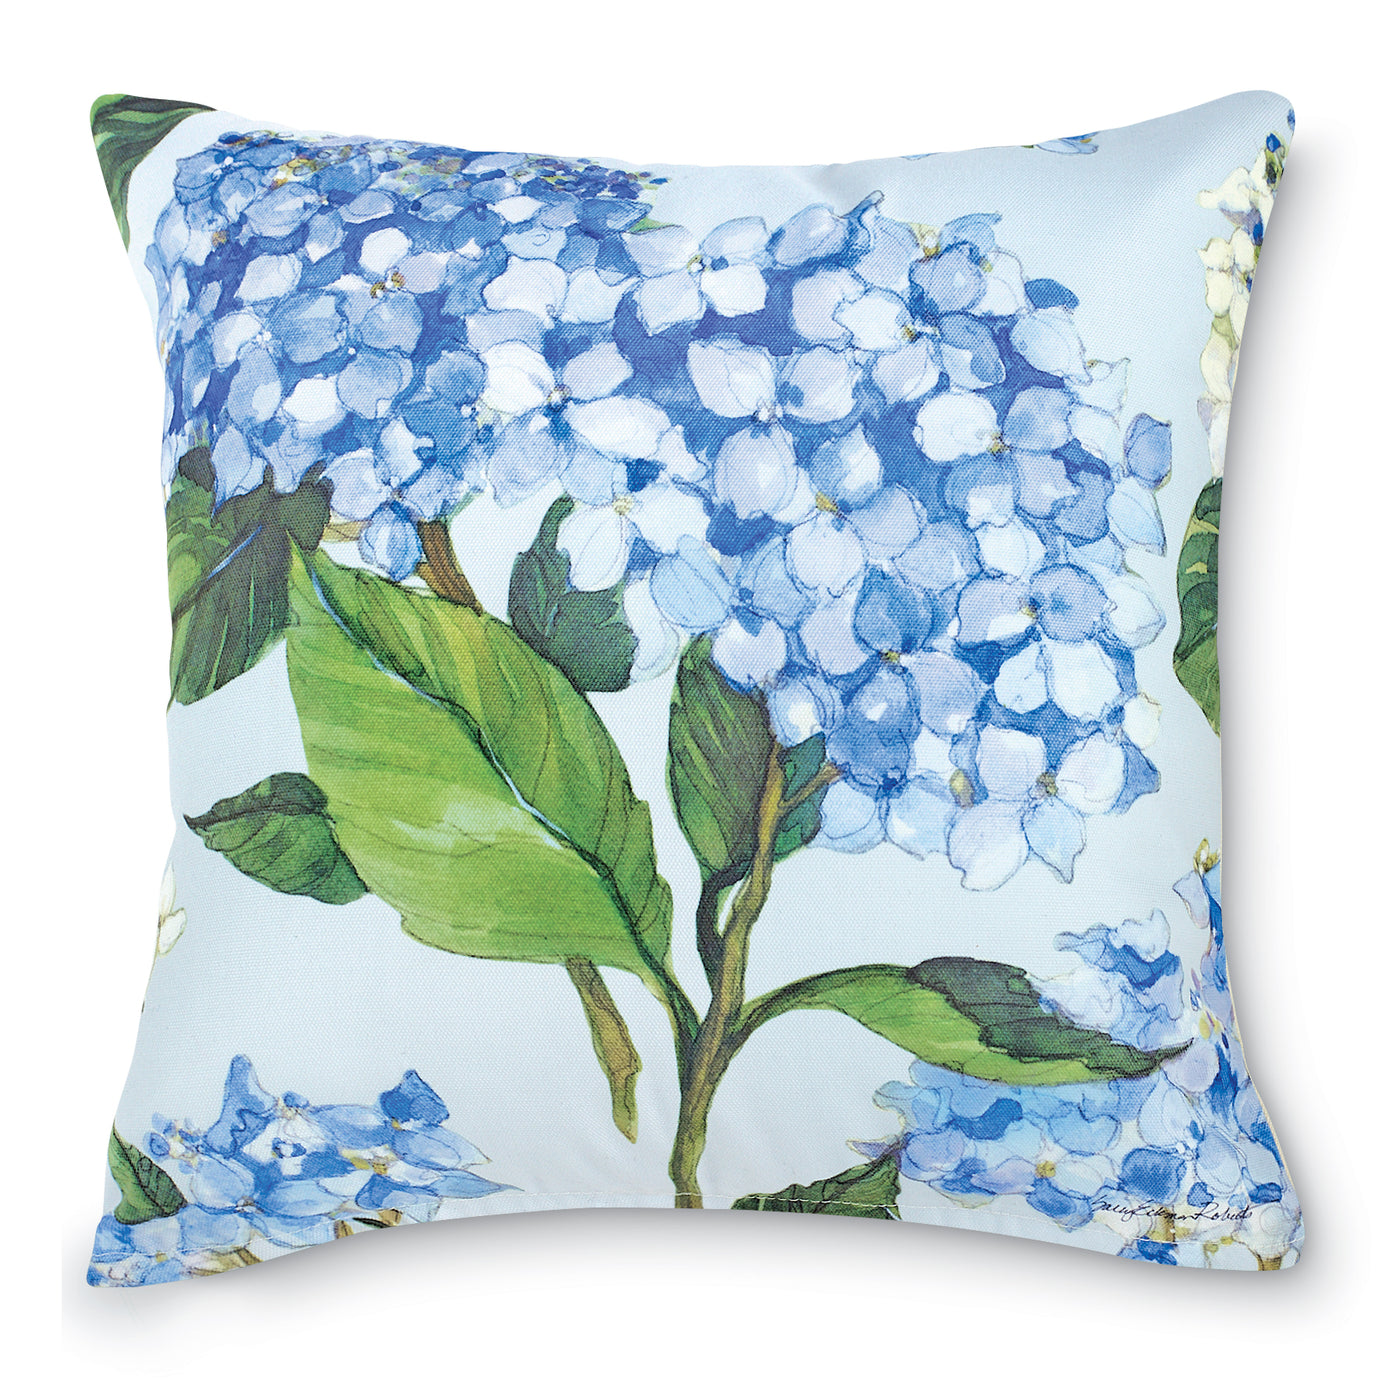 Hydrangea on Blue Pillow I